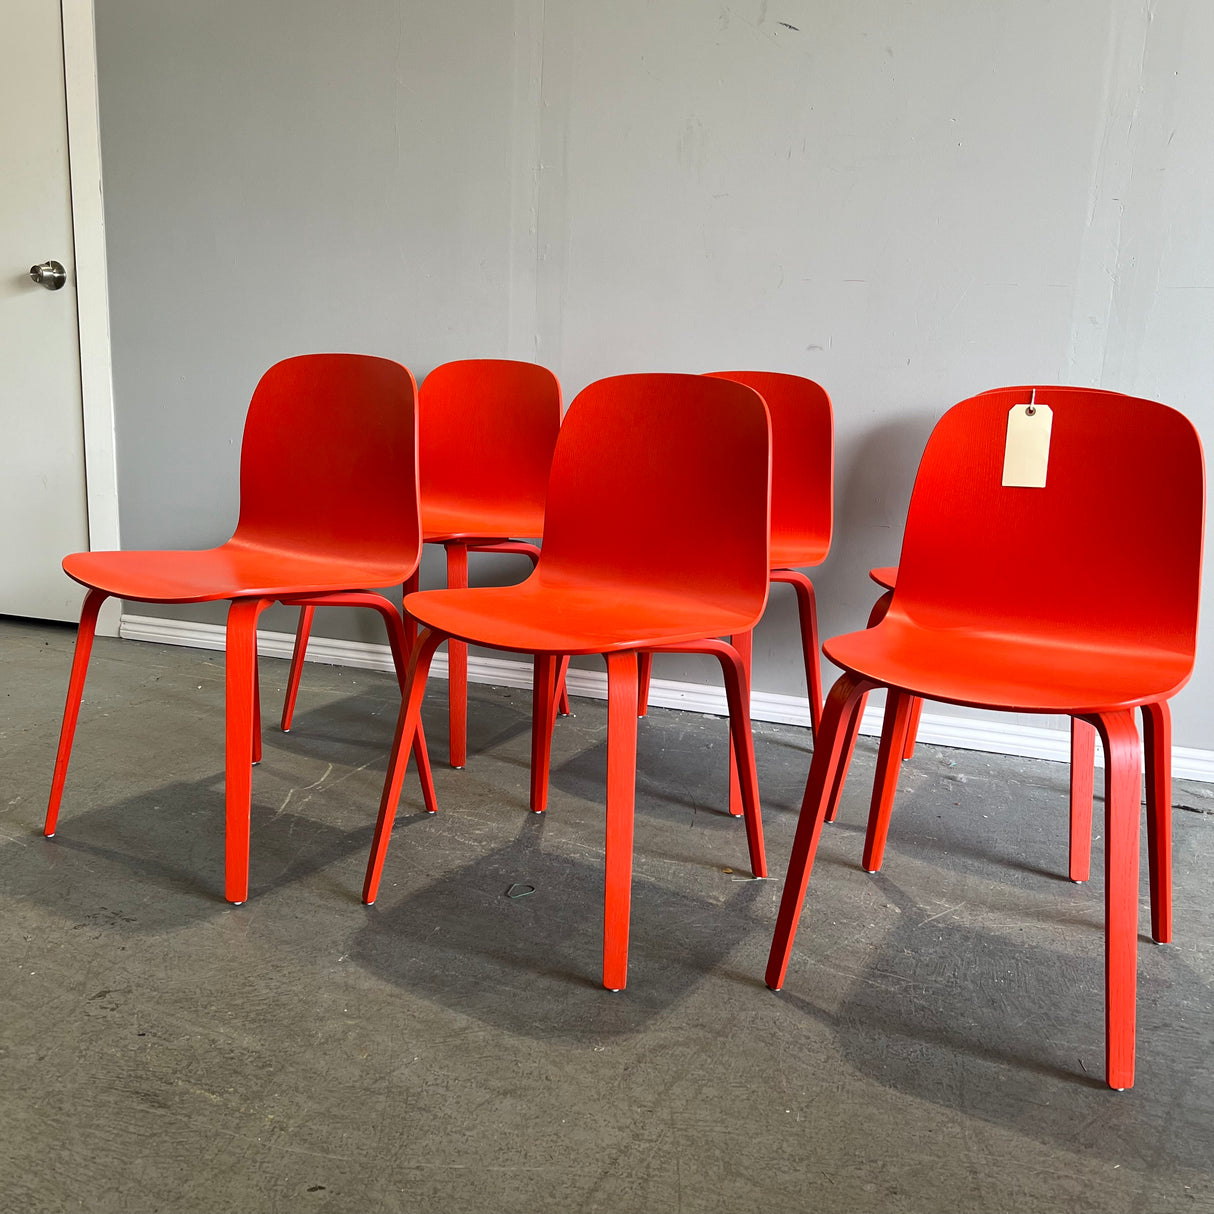 Design Within Reach Muuto Visu Set of 6 dining chairs (Retail $2800+)